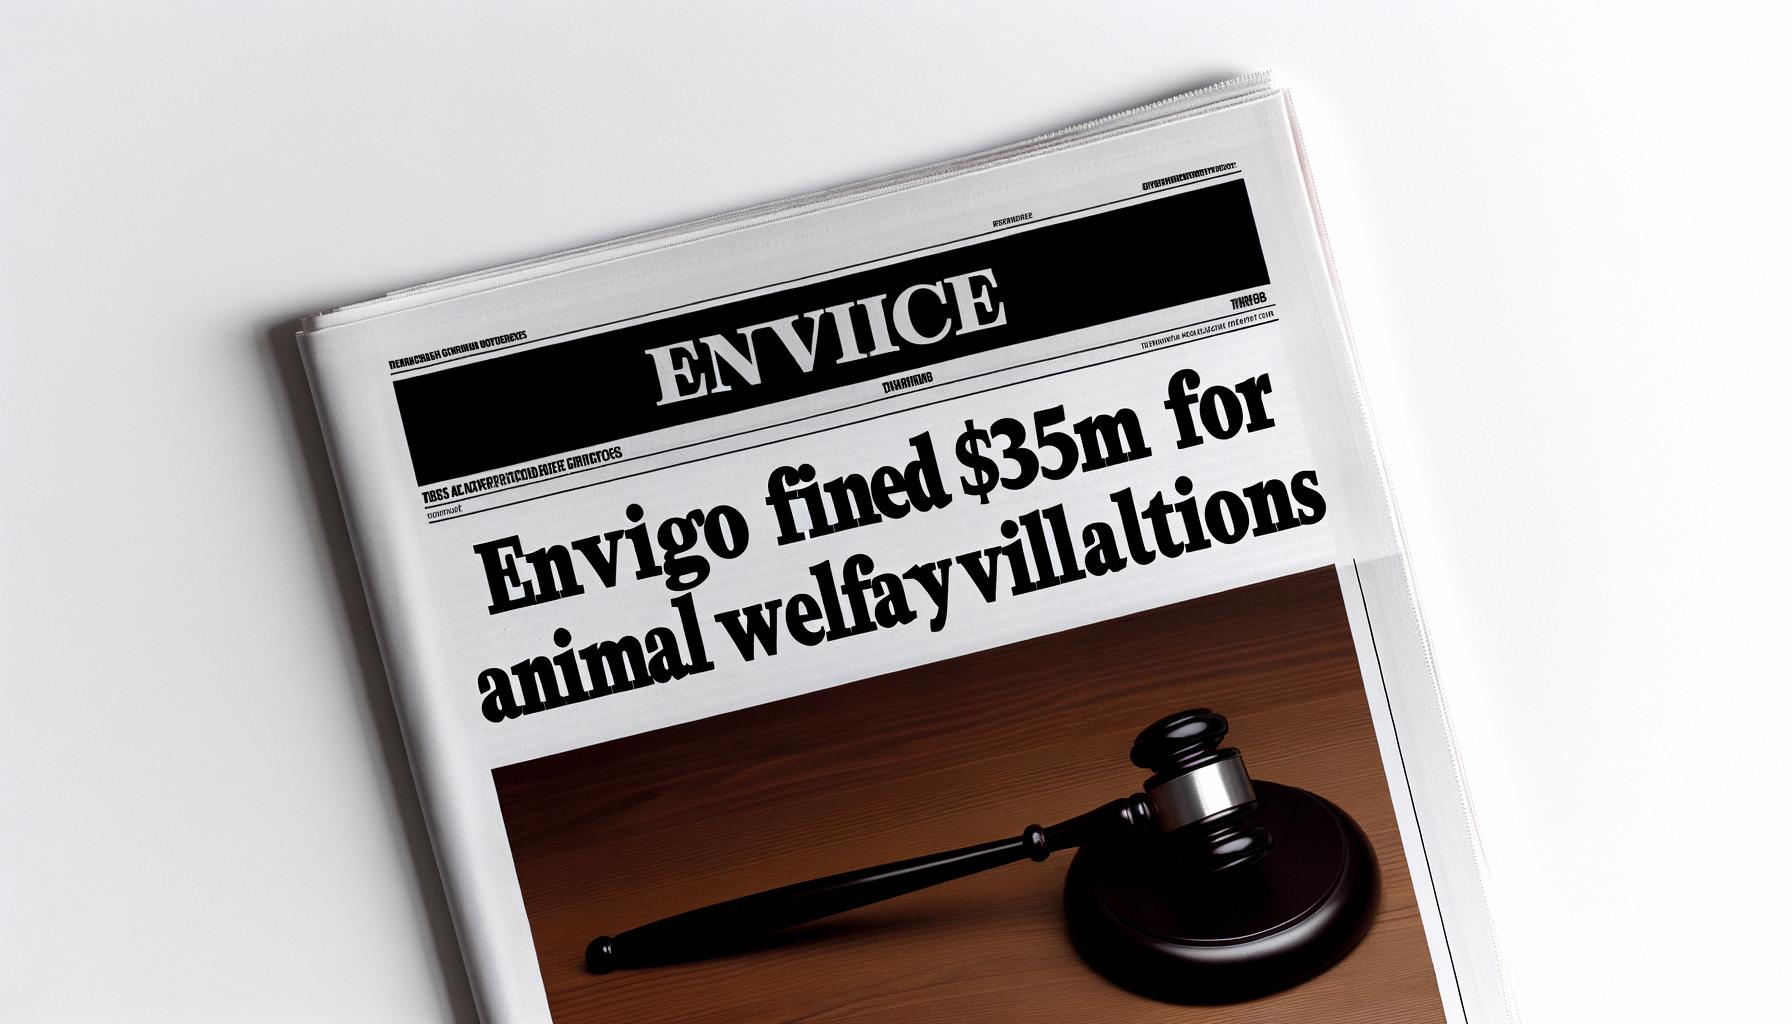 Envigo fined $35M for severe animal welfare violations and mistreatment.